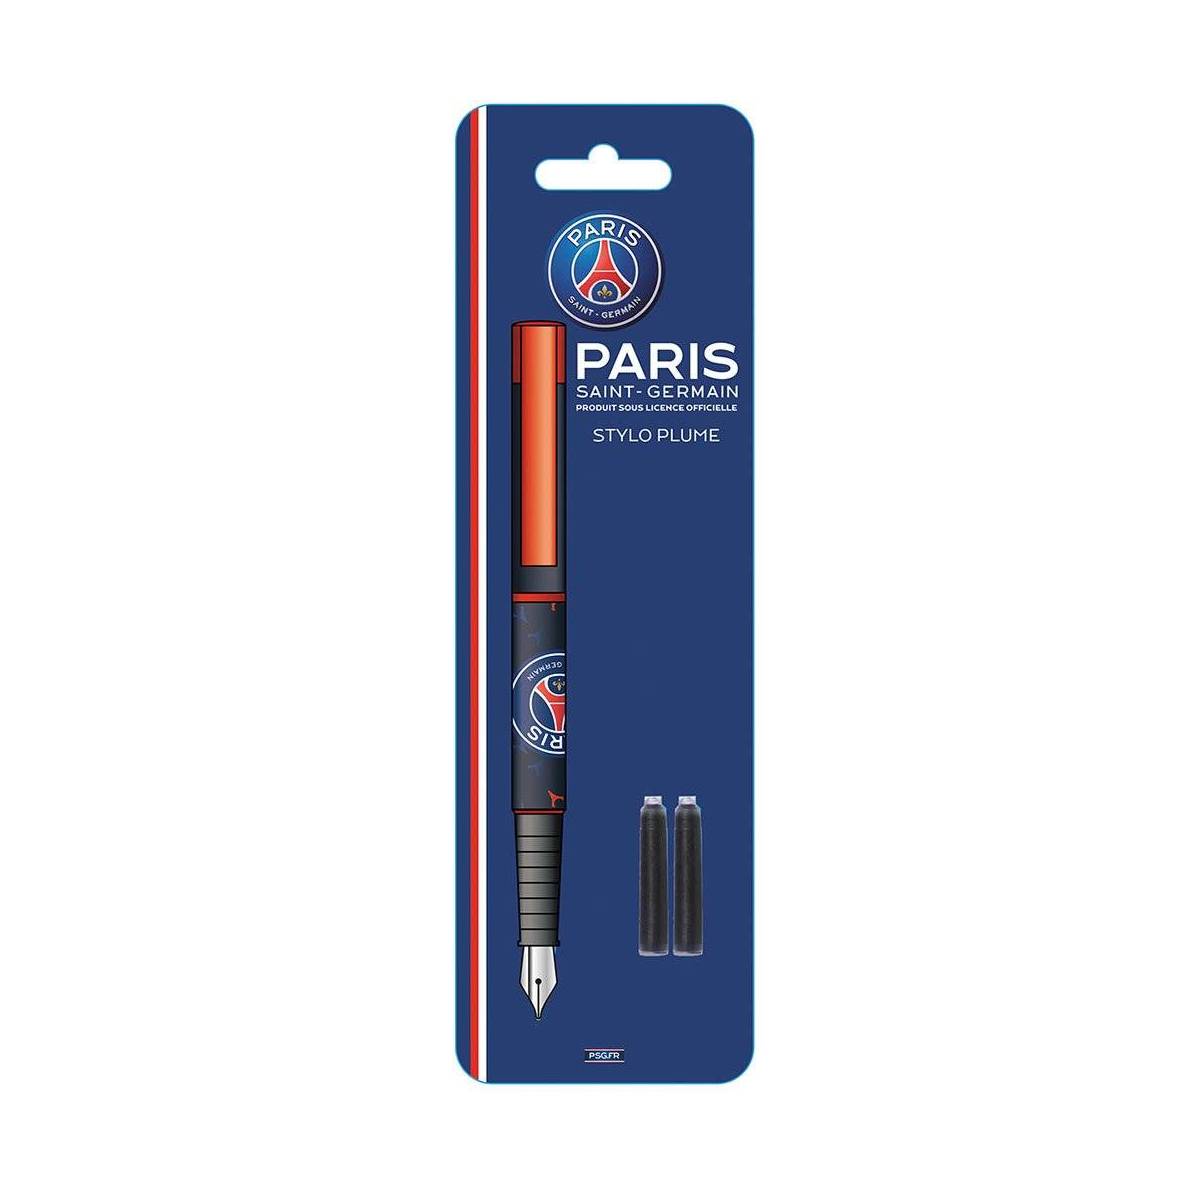 Official Paris Saint Germain fountain pen